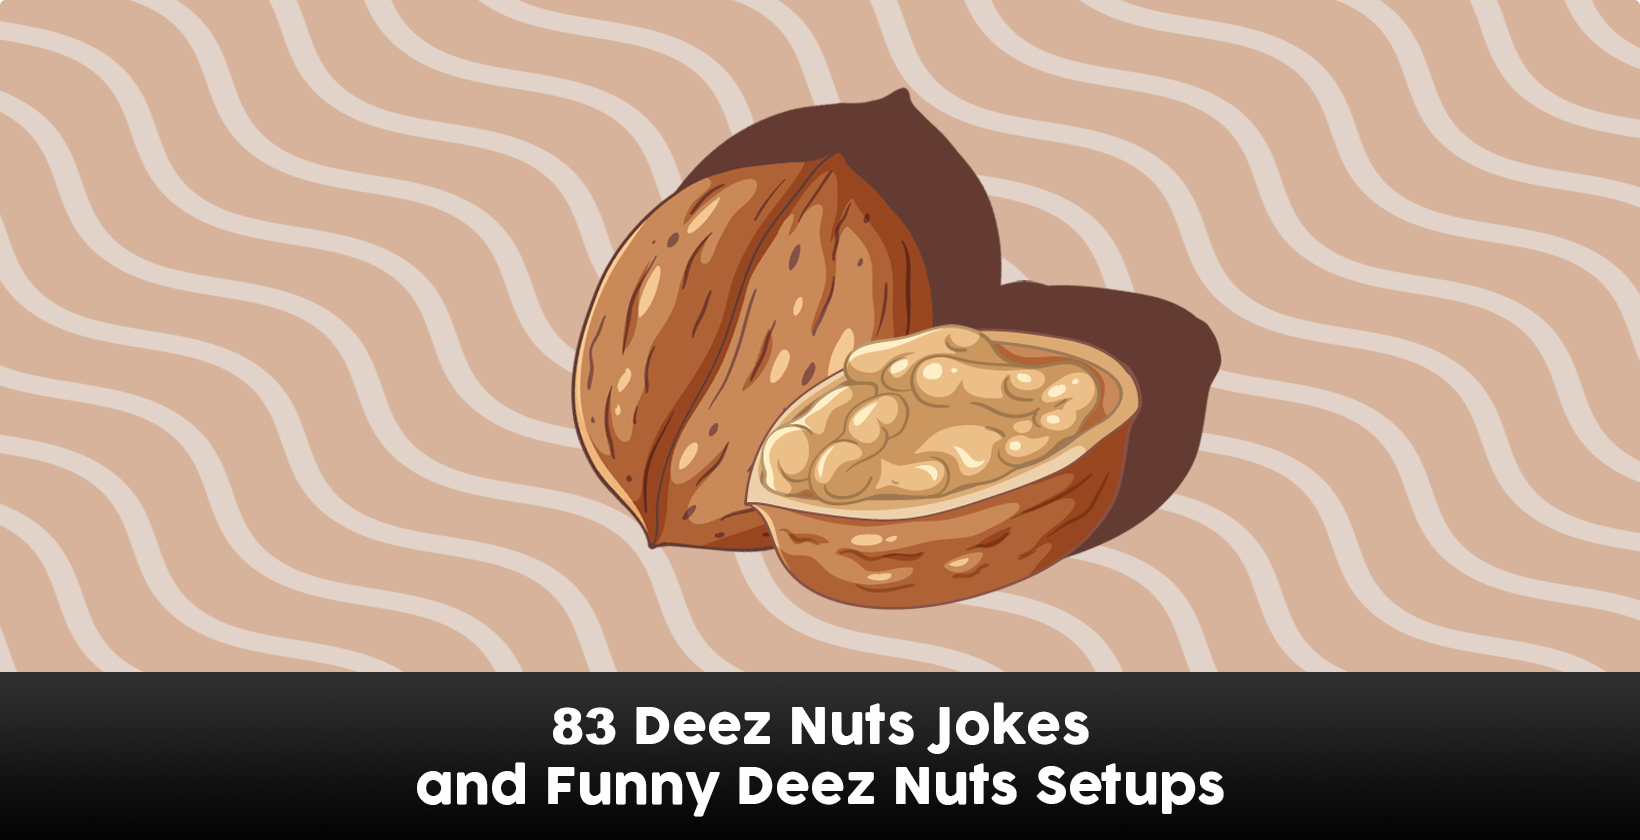 Funny deez nuts jokes